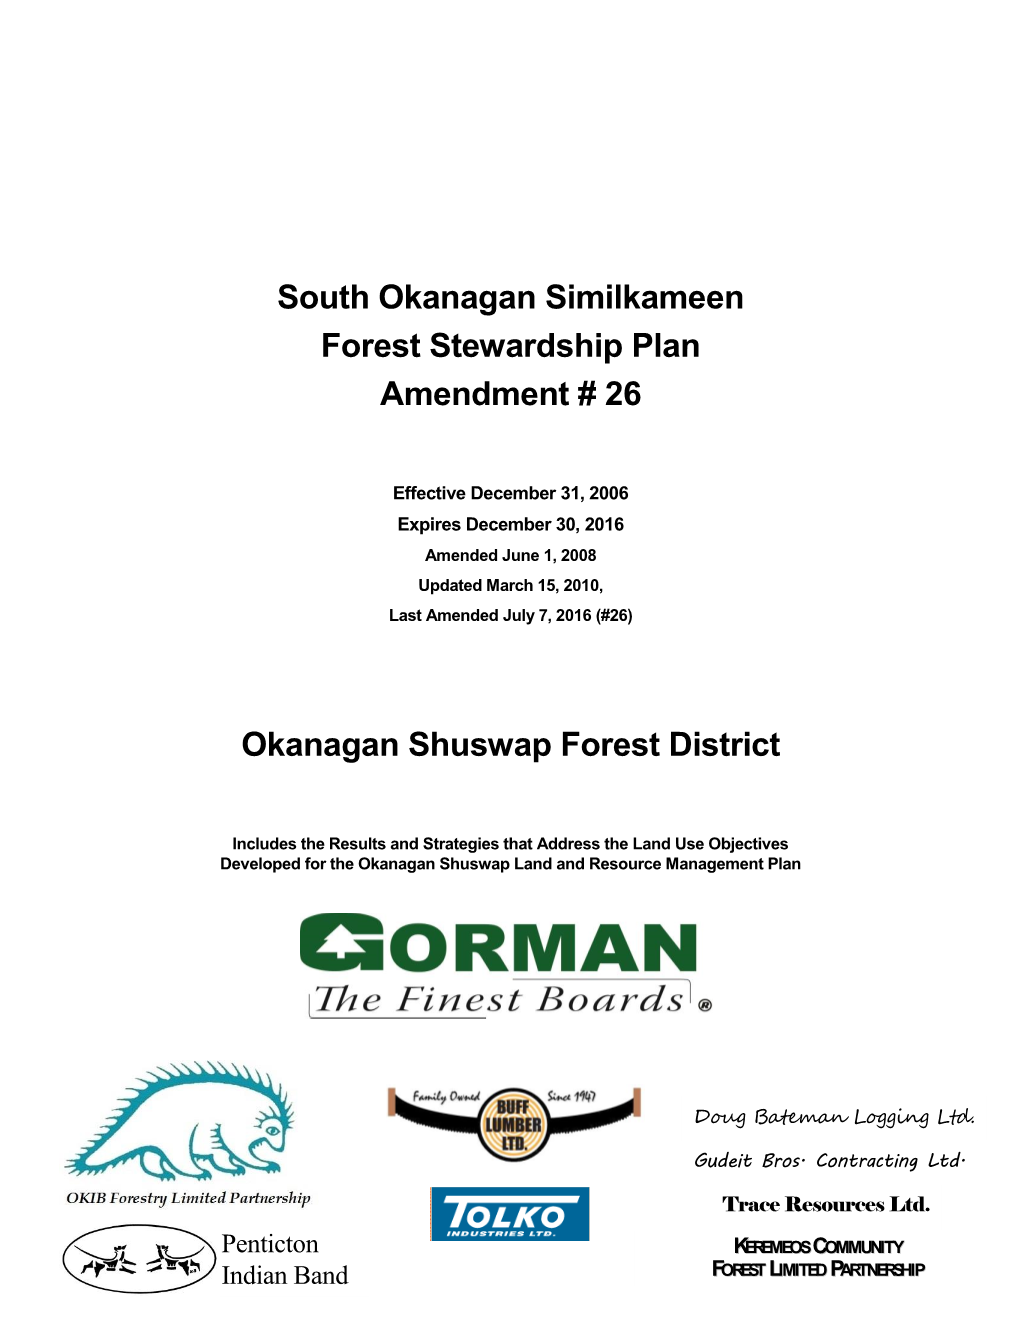 South Okanagan Similkameen Forest Stewardship Plan Amendment # 26